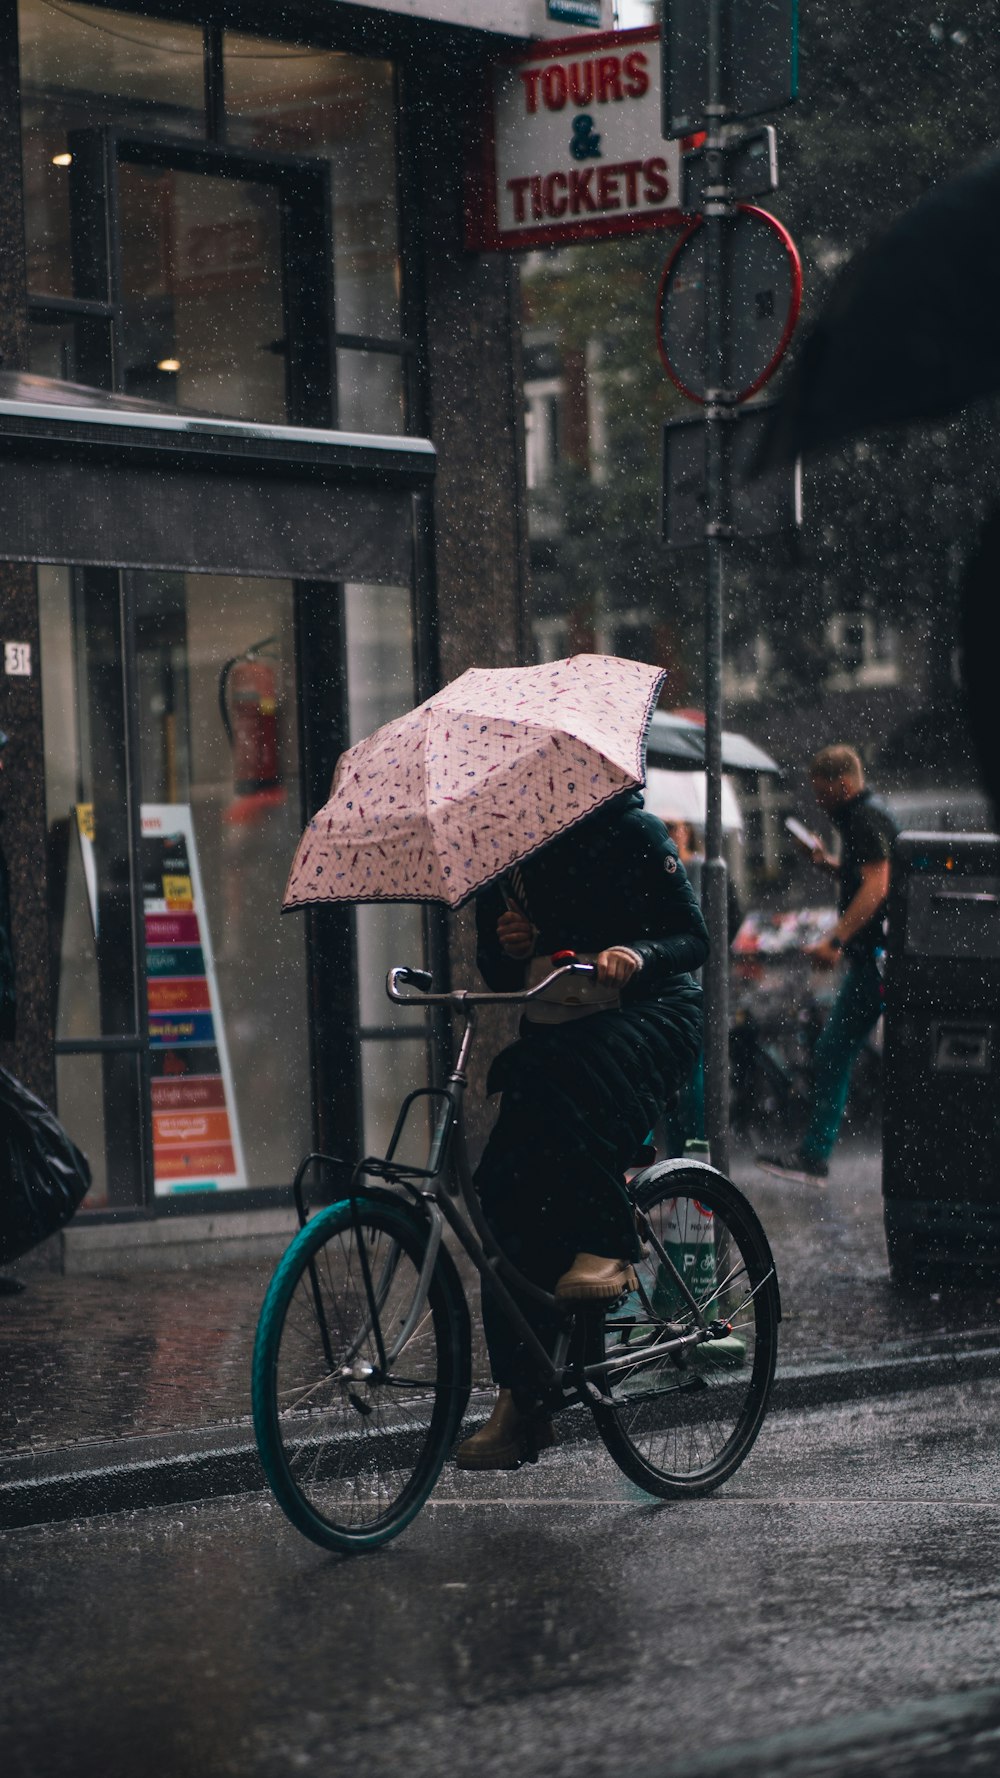 a person riding a bike with an umbrella